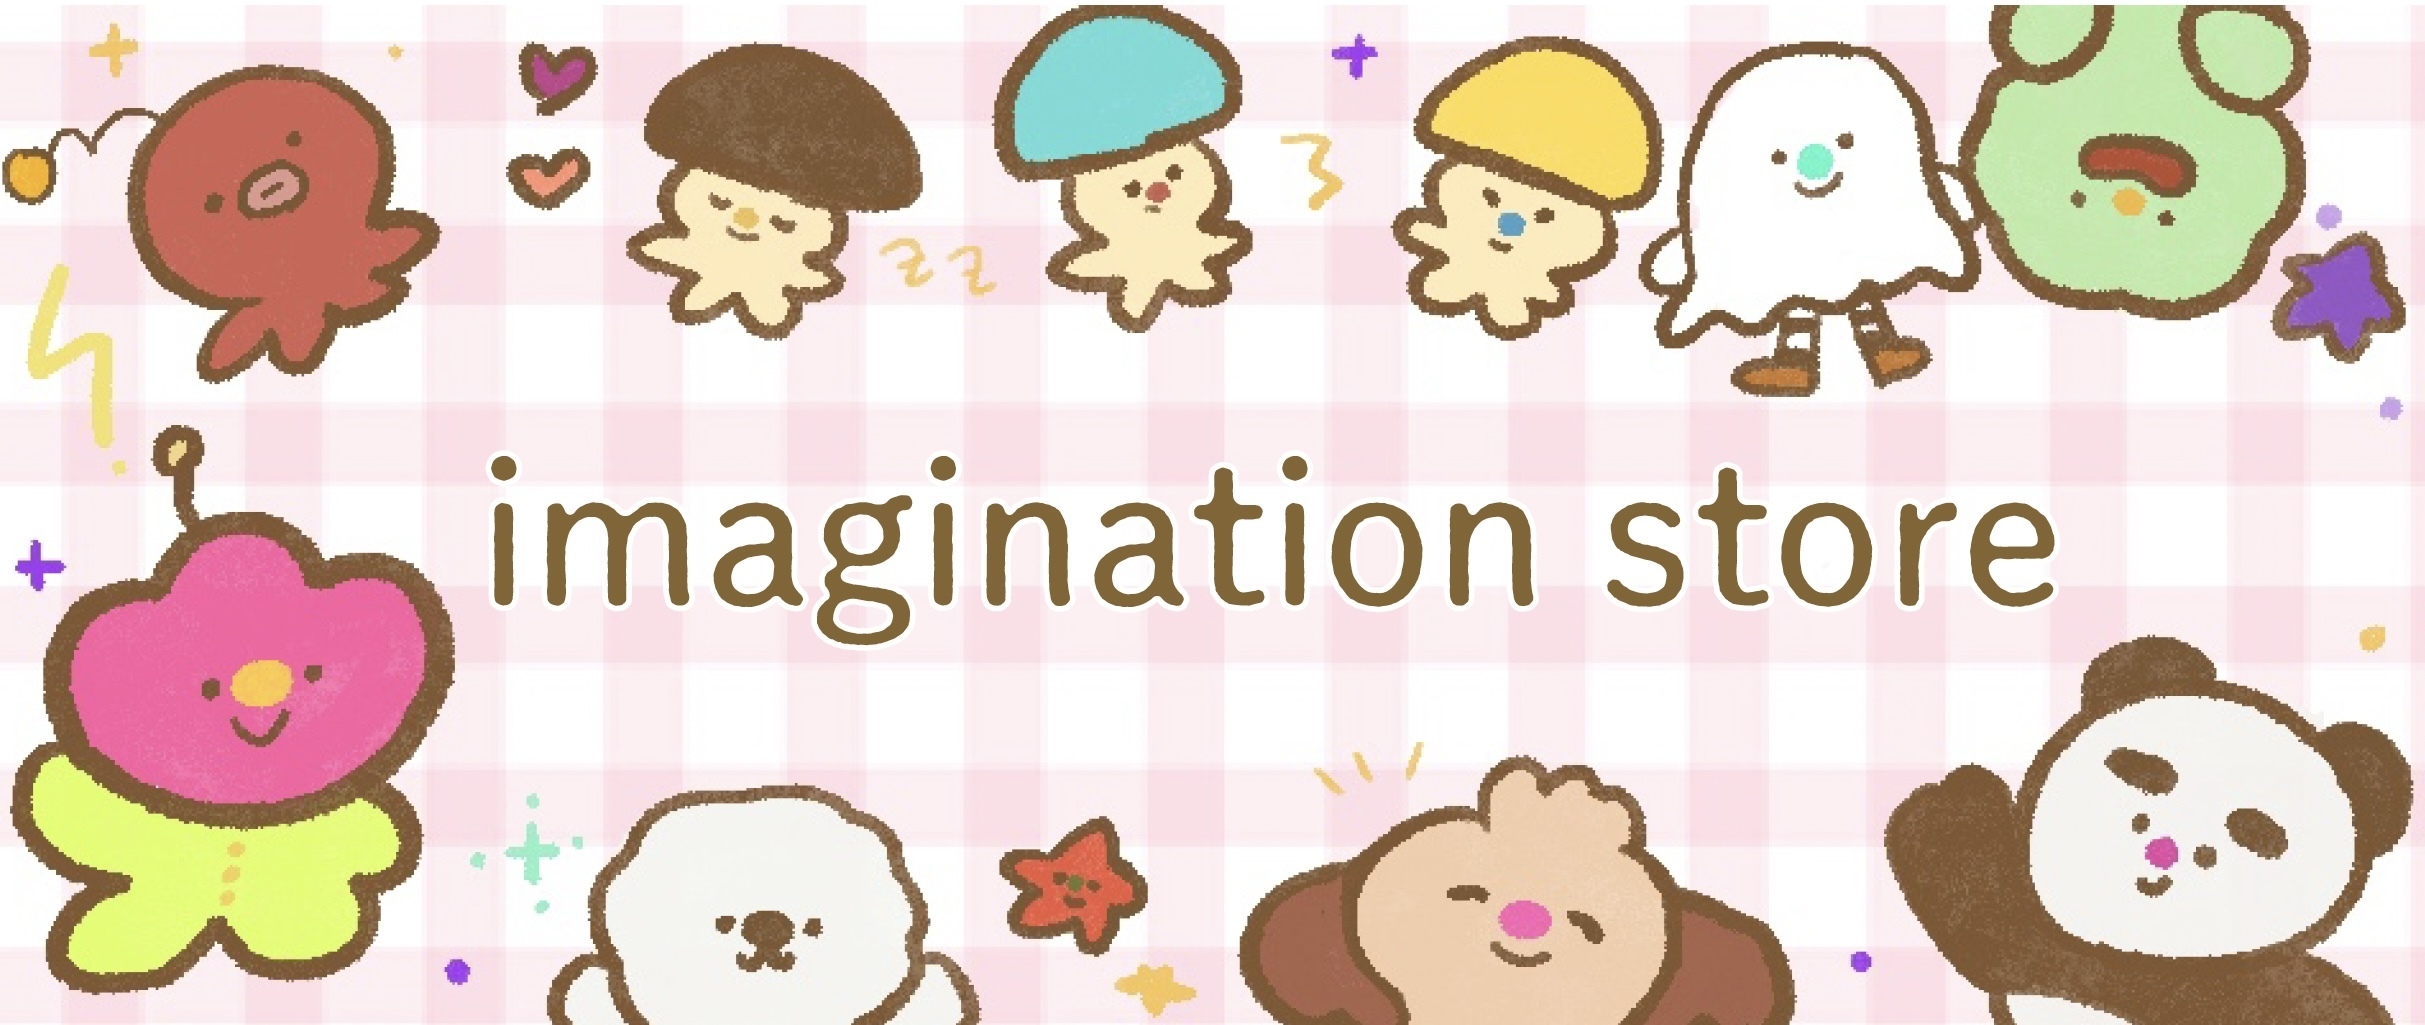 imagination store